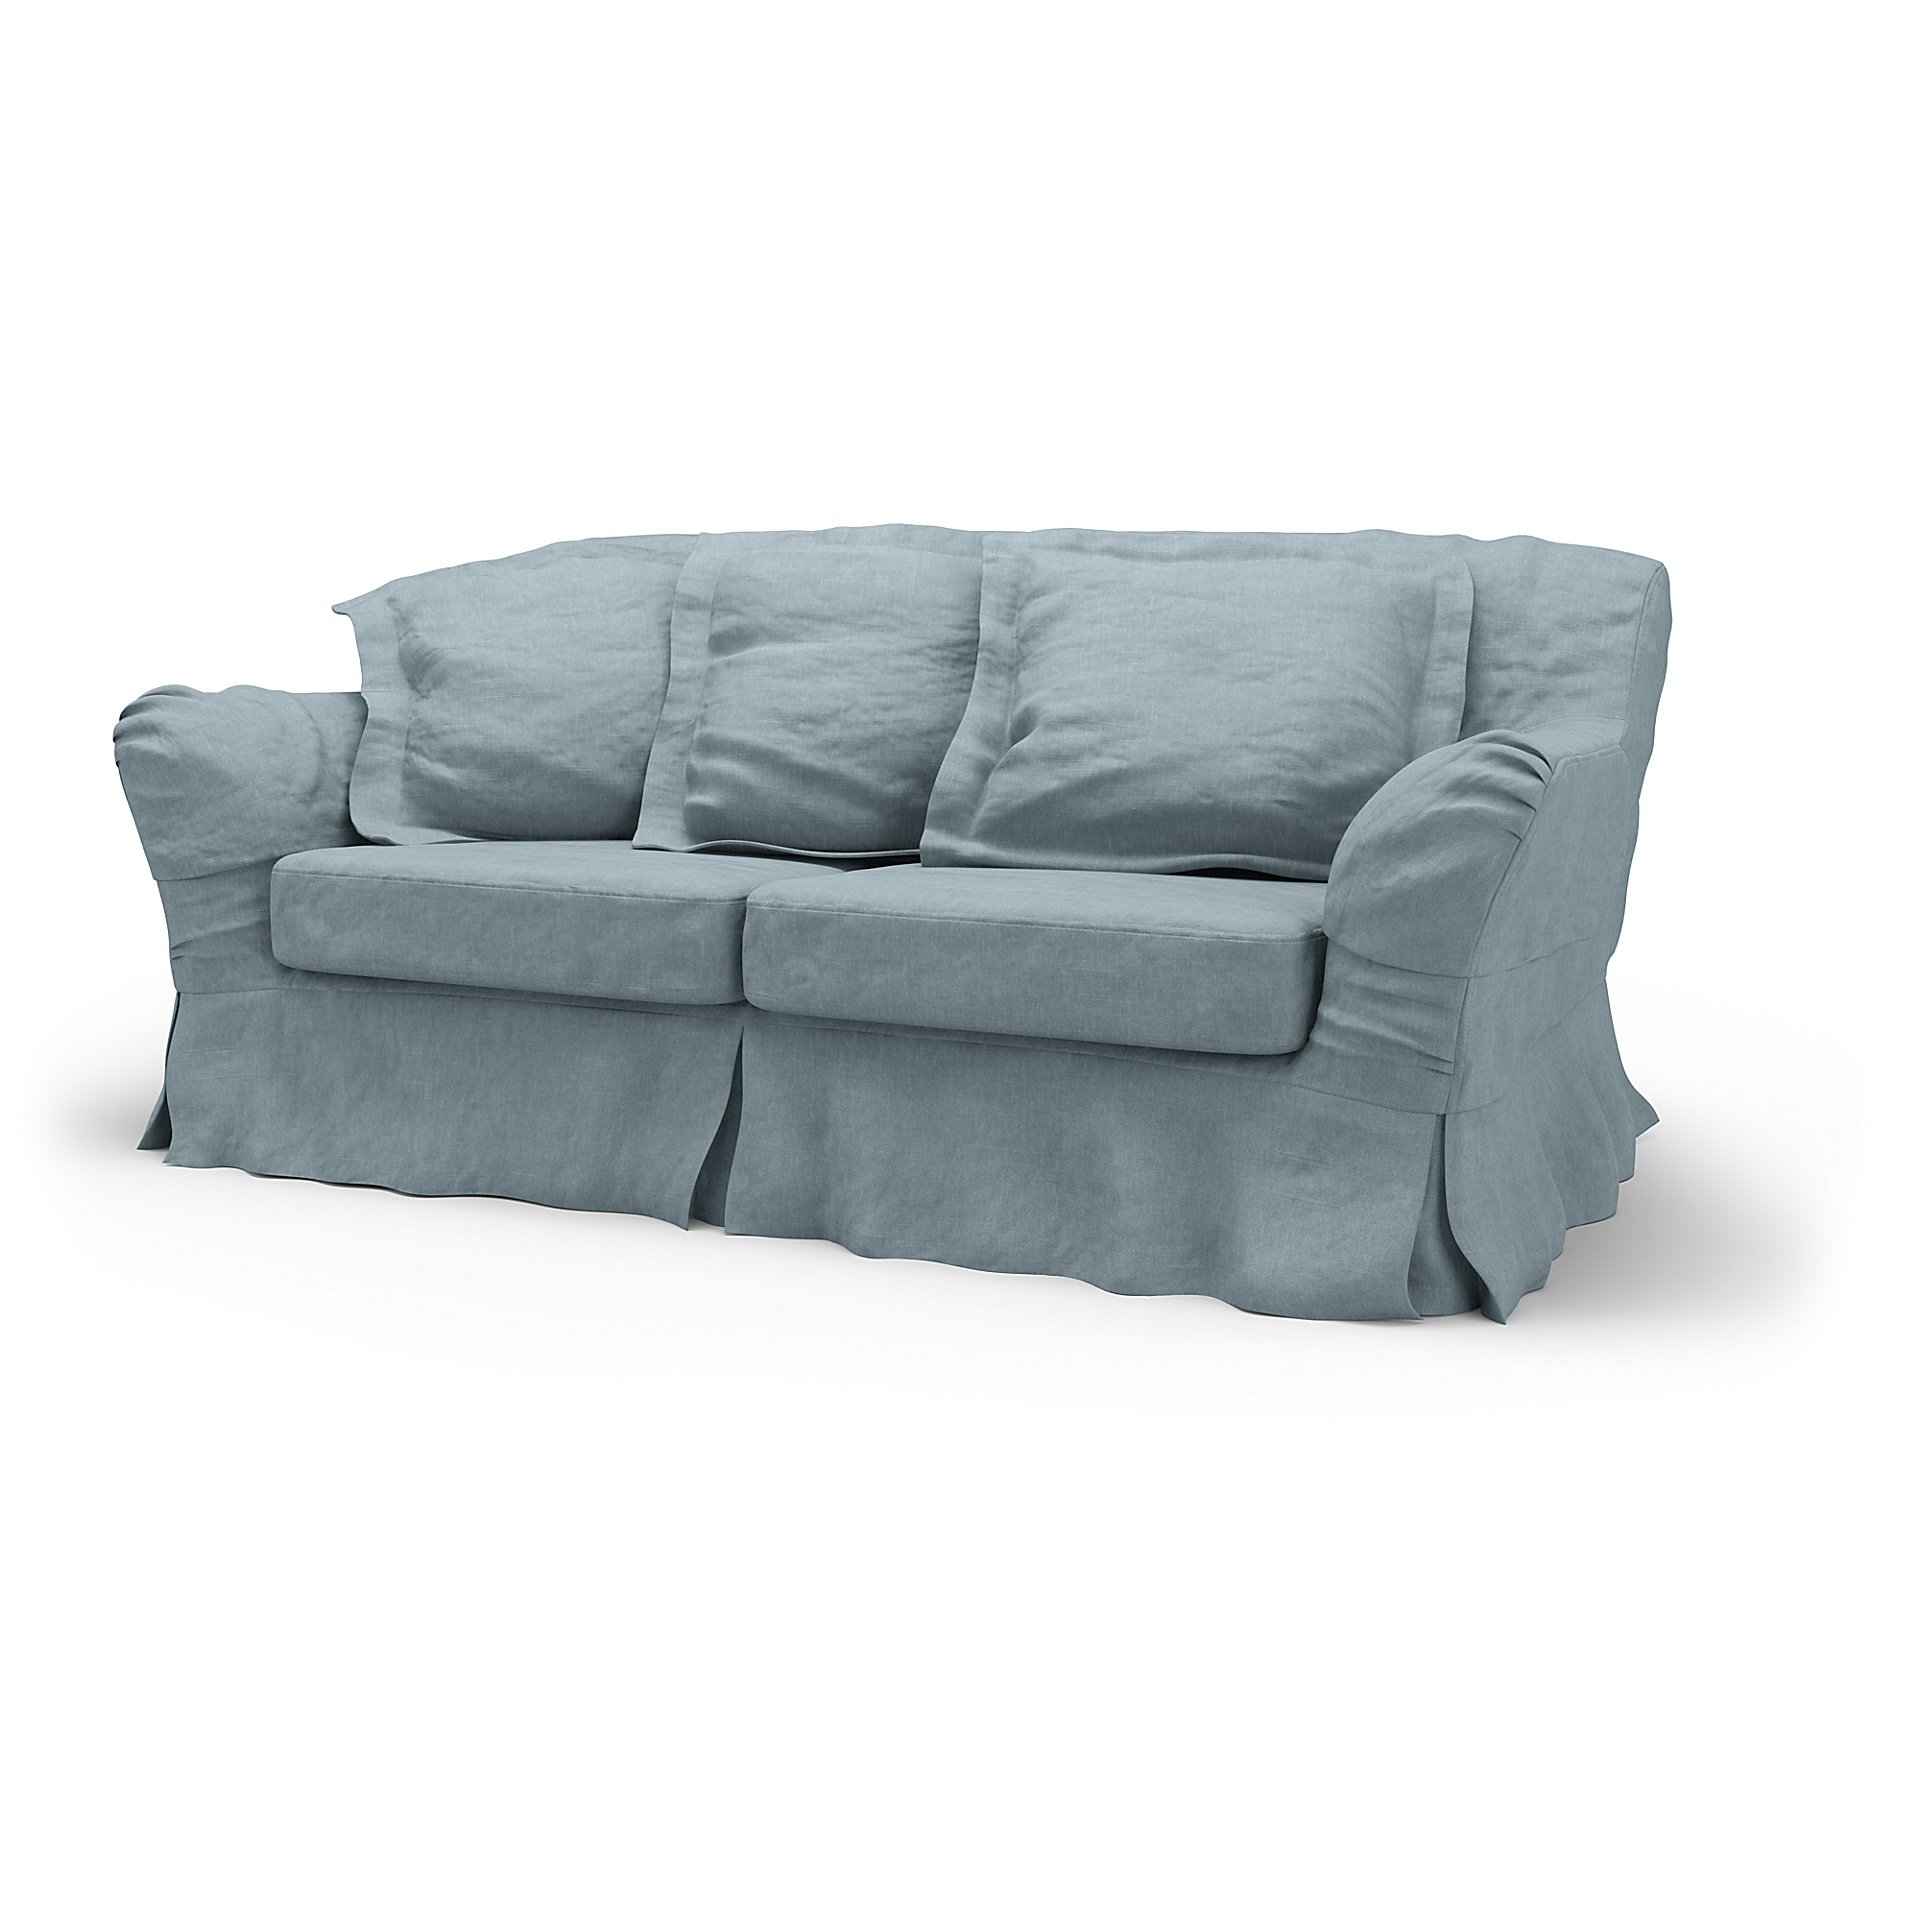 IKEA - Tomelilla 2 Seater Sofa Cover, Dusty Blue, Linen - Bemz